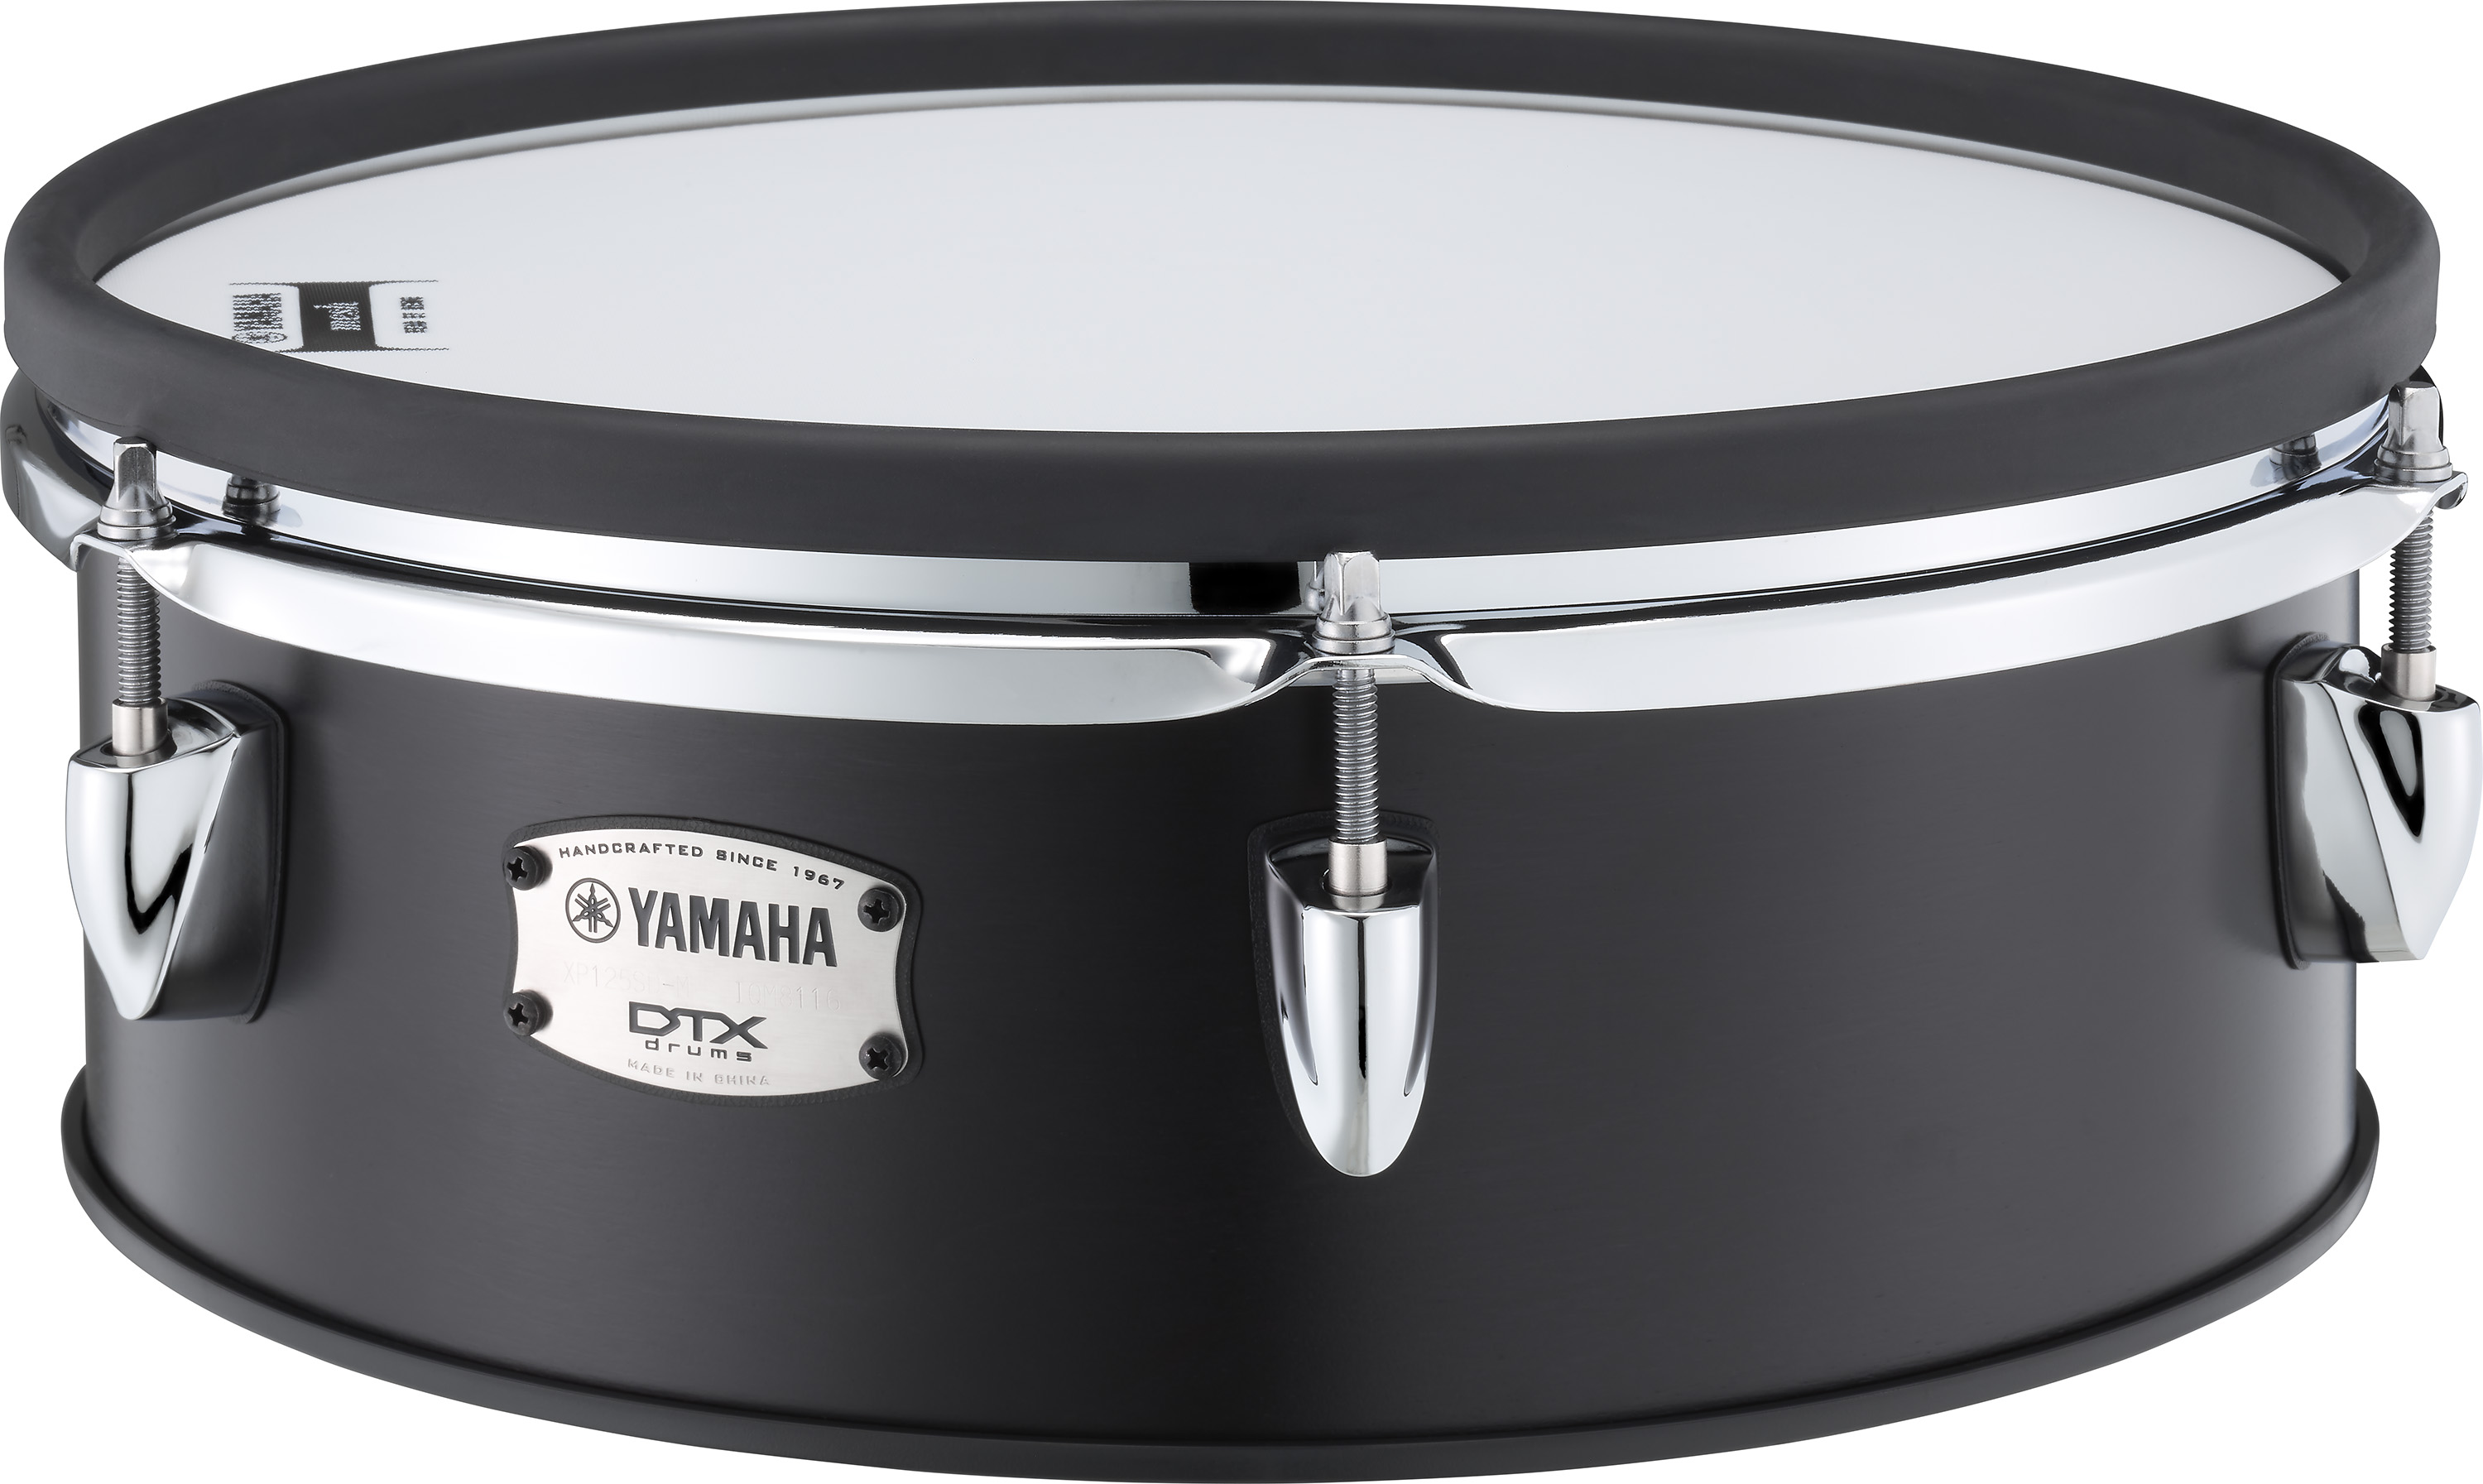 Yamaha Dtx8-km Electronic Drum Kit Mesh Black Forrest - Batería electrónica completa - Variation 1